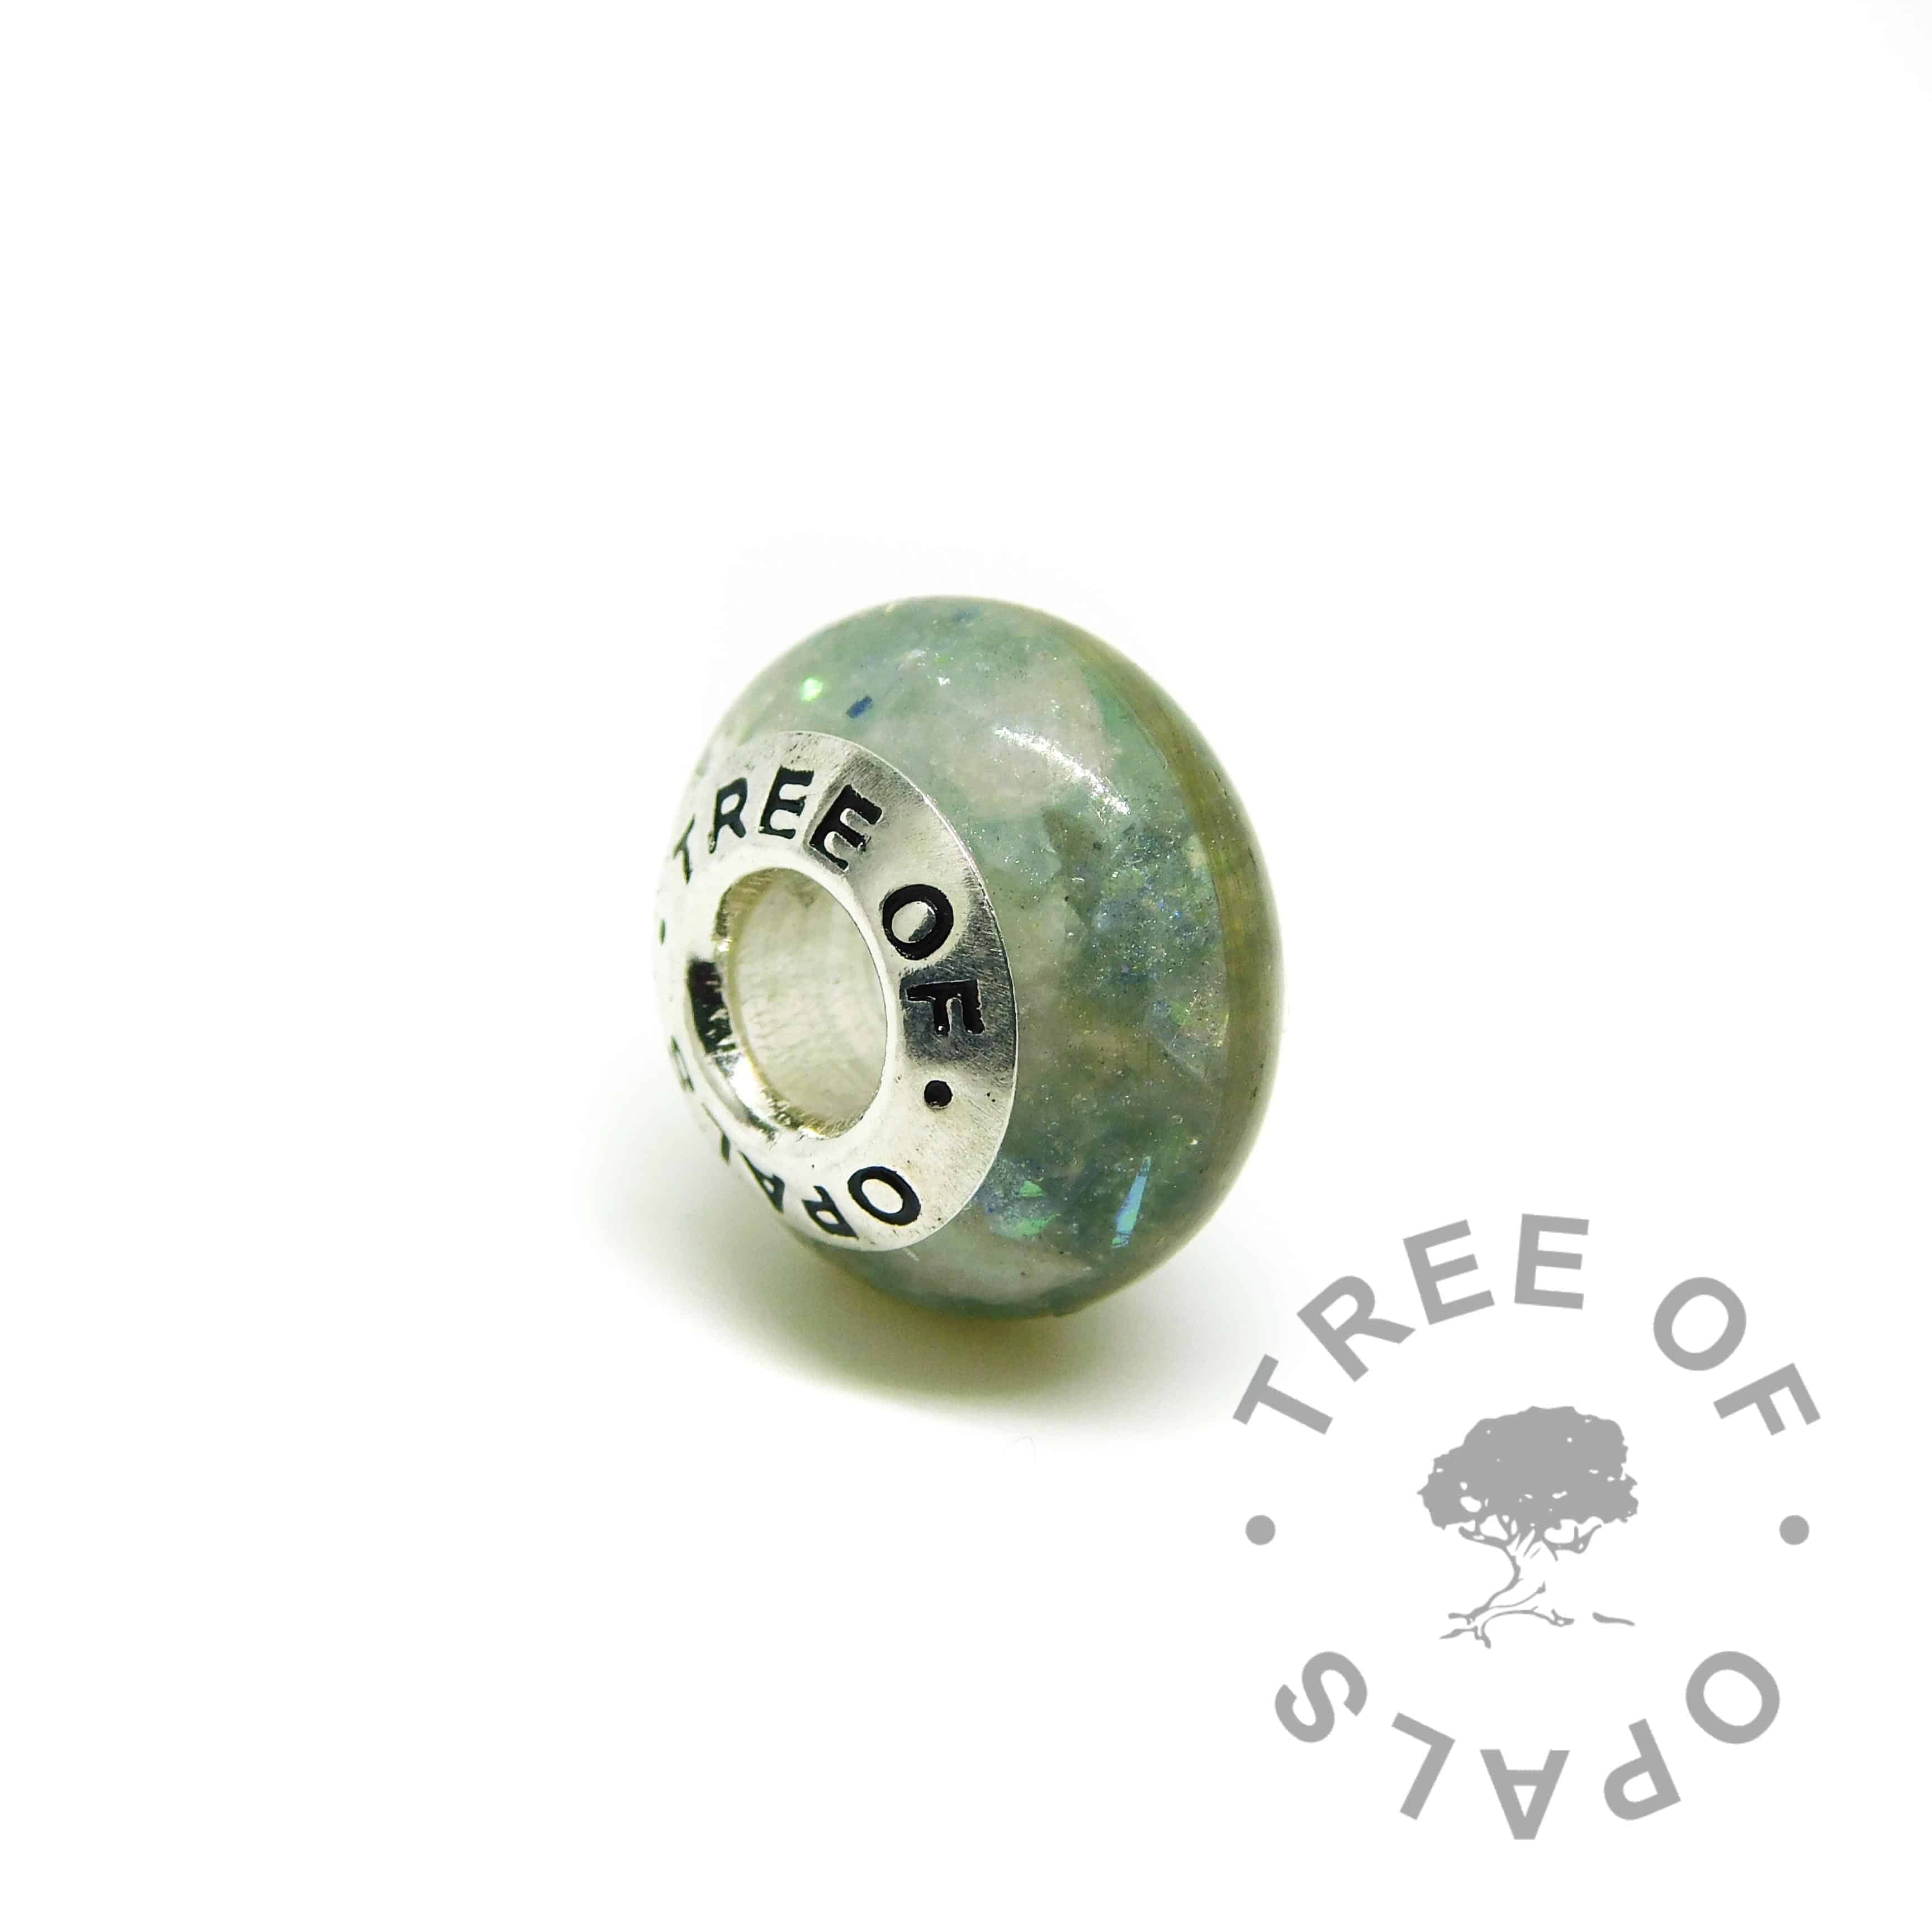 teal hair charm aquamarine. Handmade solid sterling silver keepsake jewellery by Tree of Opals